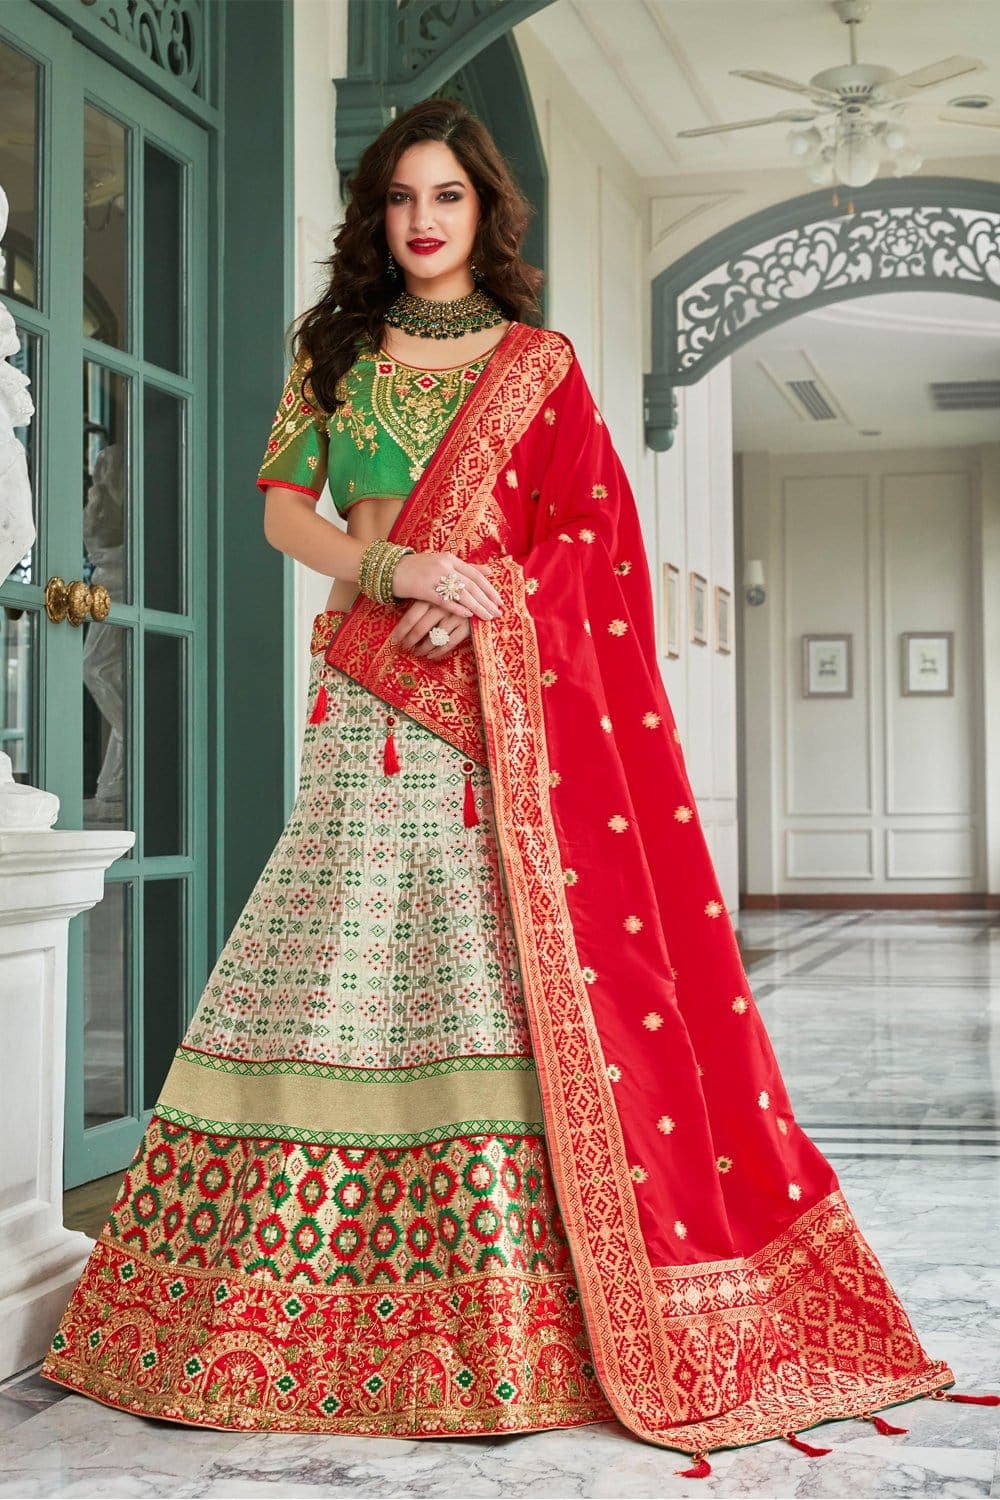 New Bridal Paithani Blouse Design